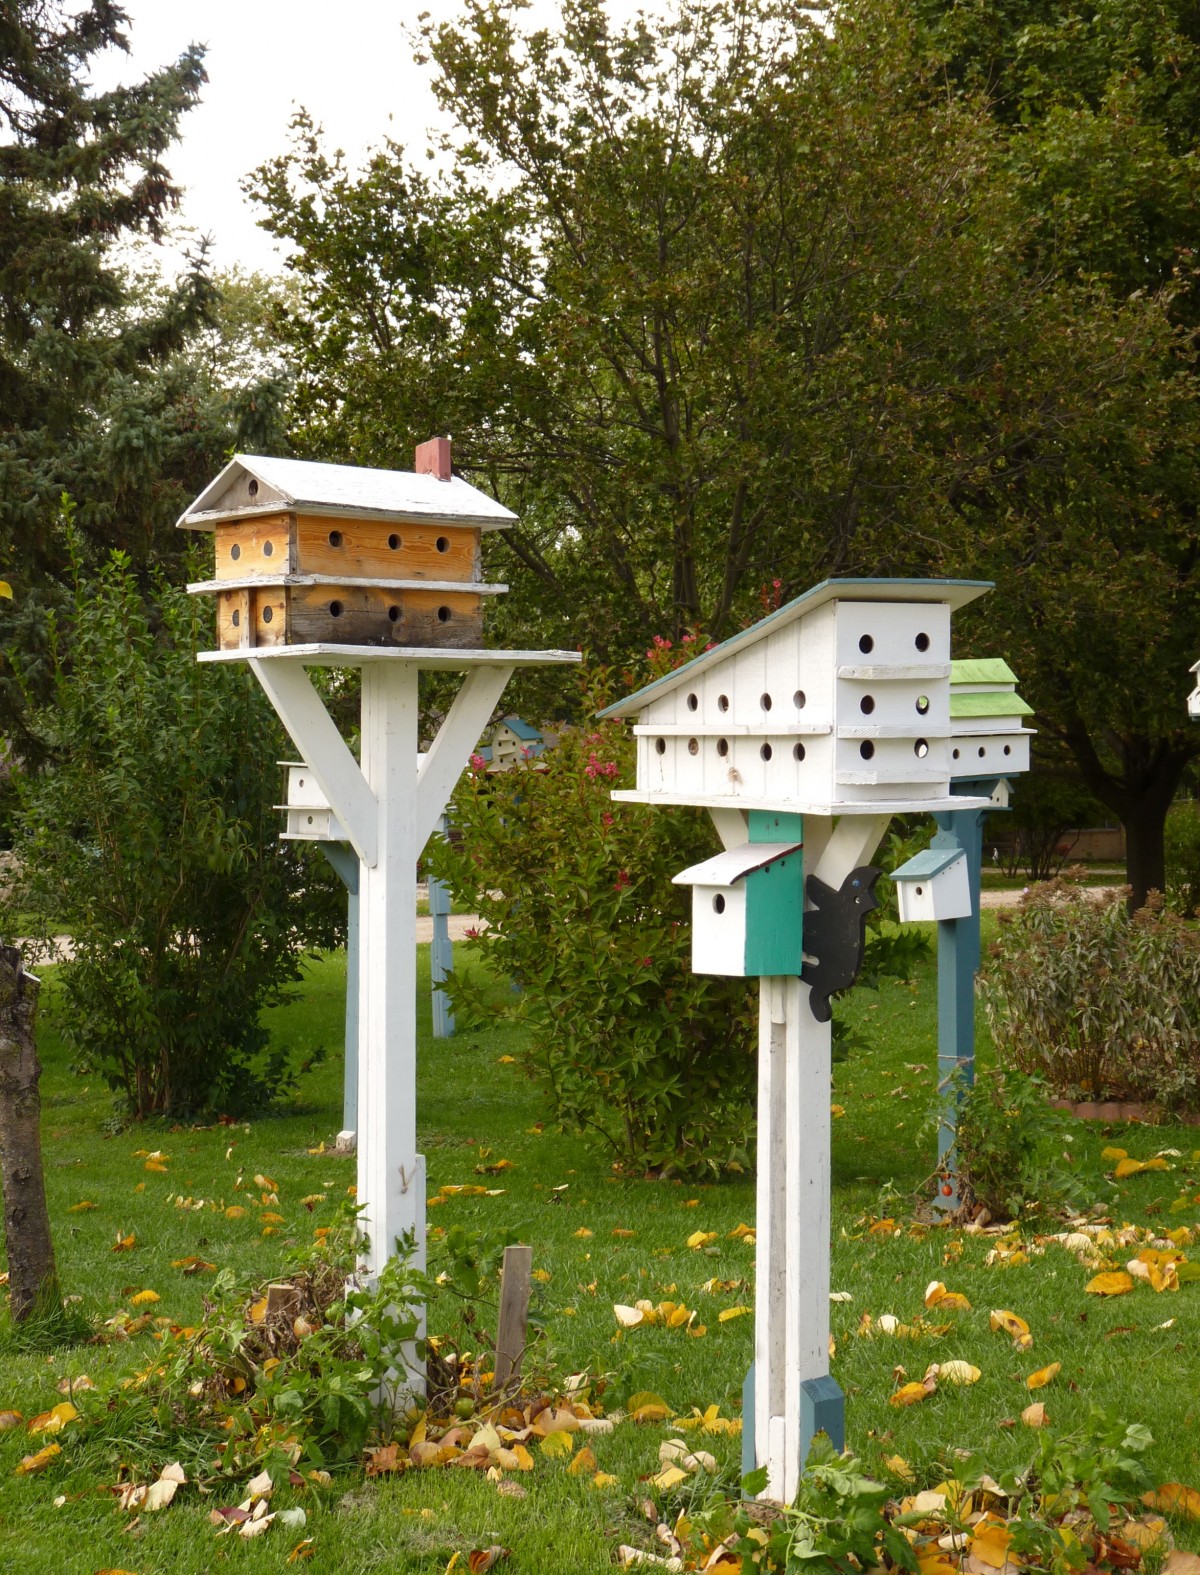 Backyard with bird house and feeders